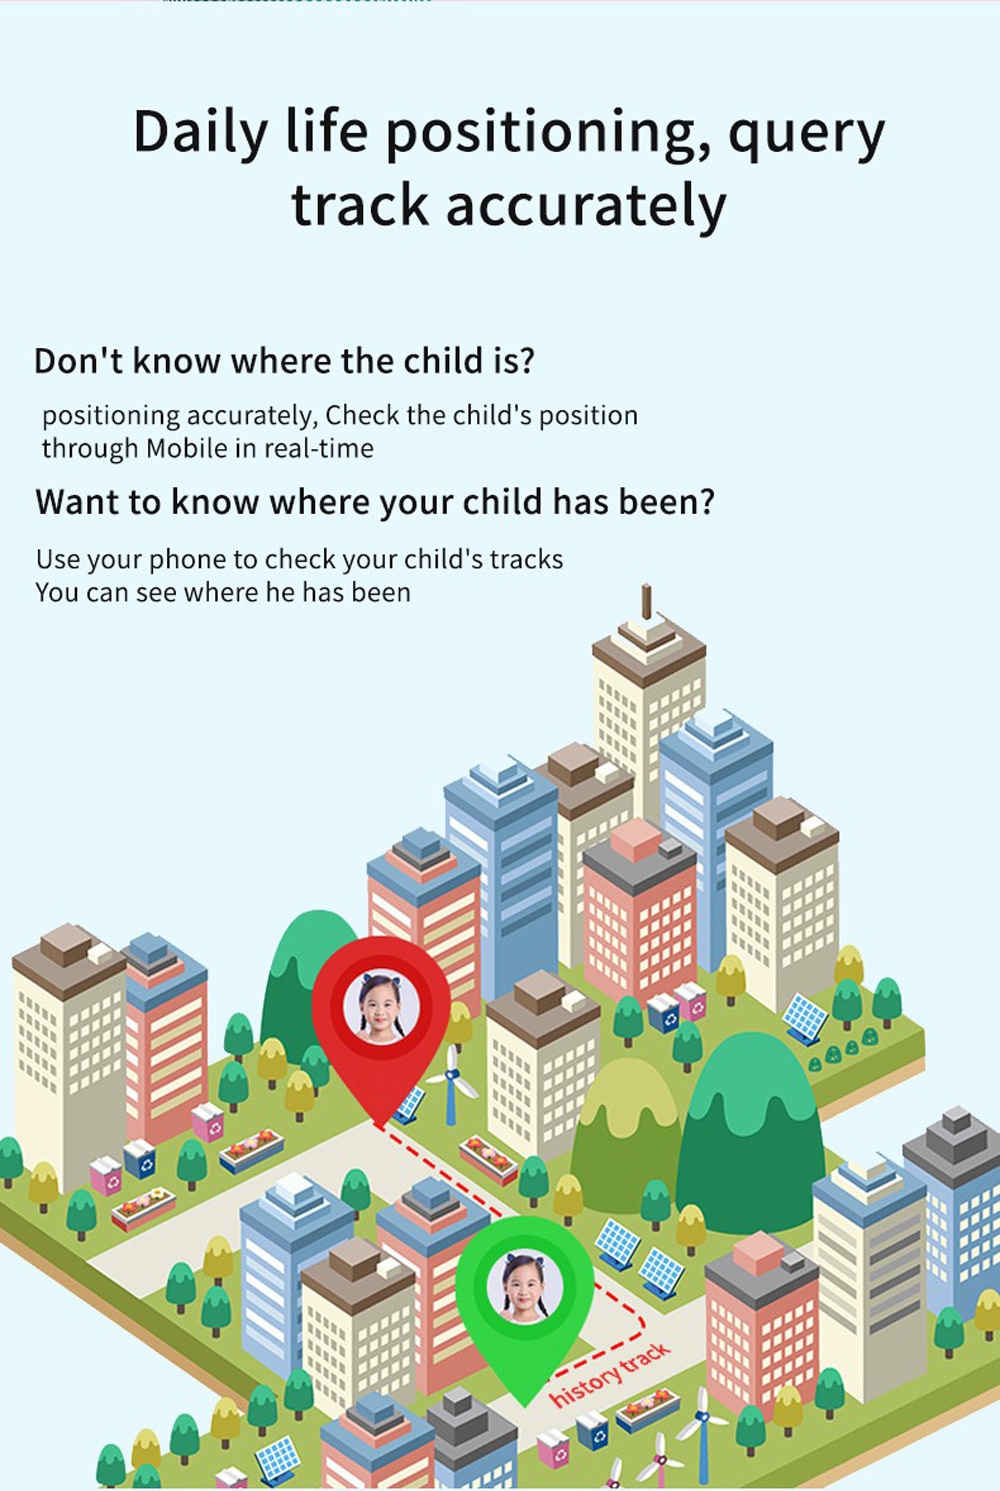 Childrens-Smart-Watch-SOS-Phone-Watch-Smartwatch-For-Kids-With-Sim-Card-Photo-Waterproof-IP67-Kids-G-1005001344135749